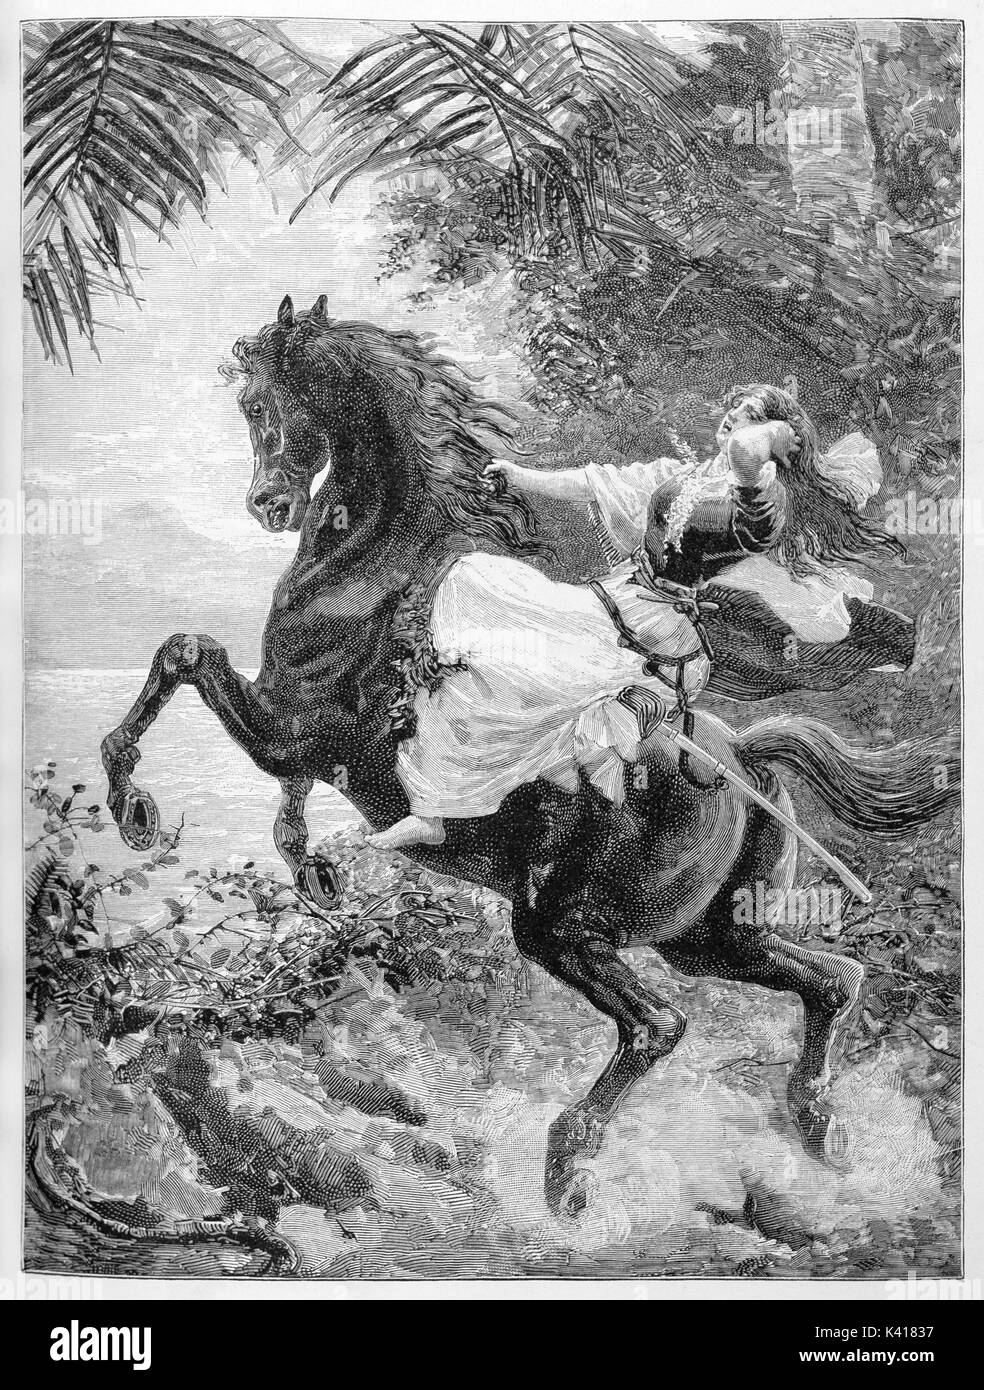 Ancient strong woman riding a prancing black horse. Anita Garibaldi horseback fording a river. By E. Matania published on Garibaldi e i Suoi Tempi Milan Italy 1884 Stock Photo